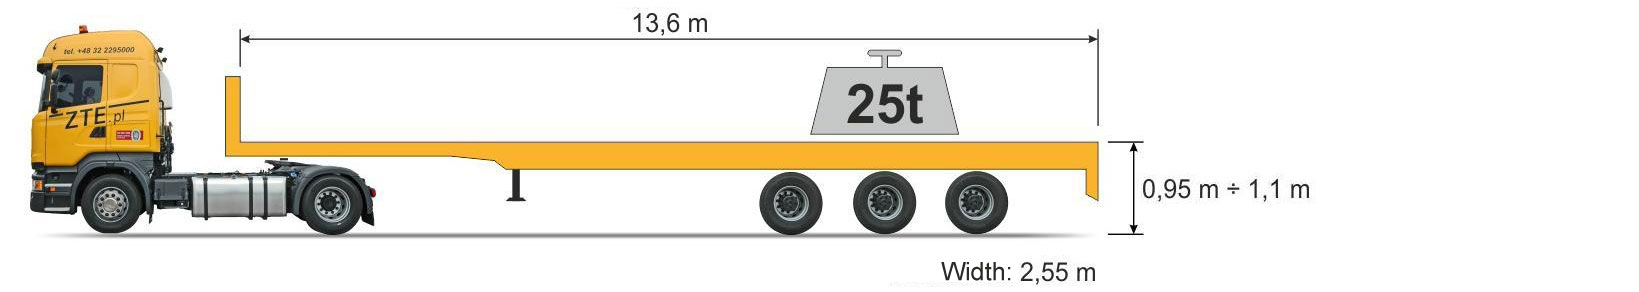 Mega platform  type semi-trailer